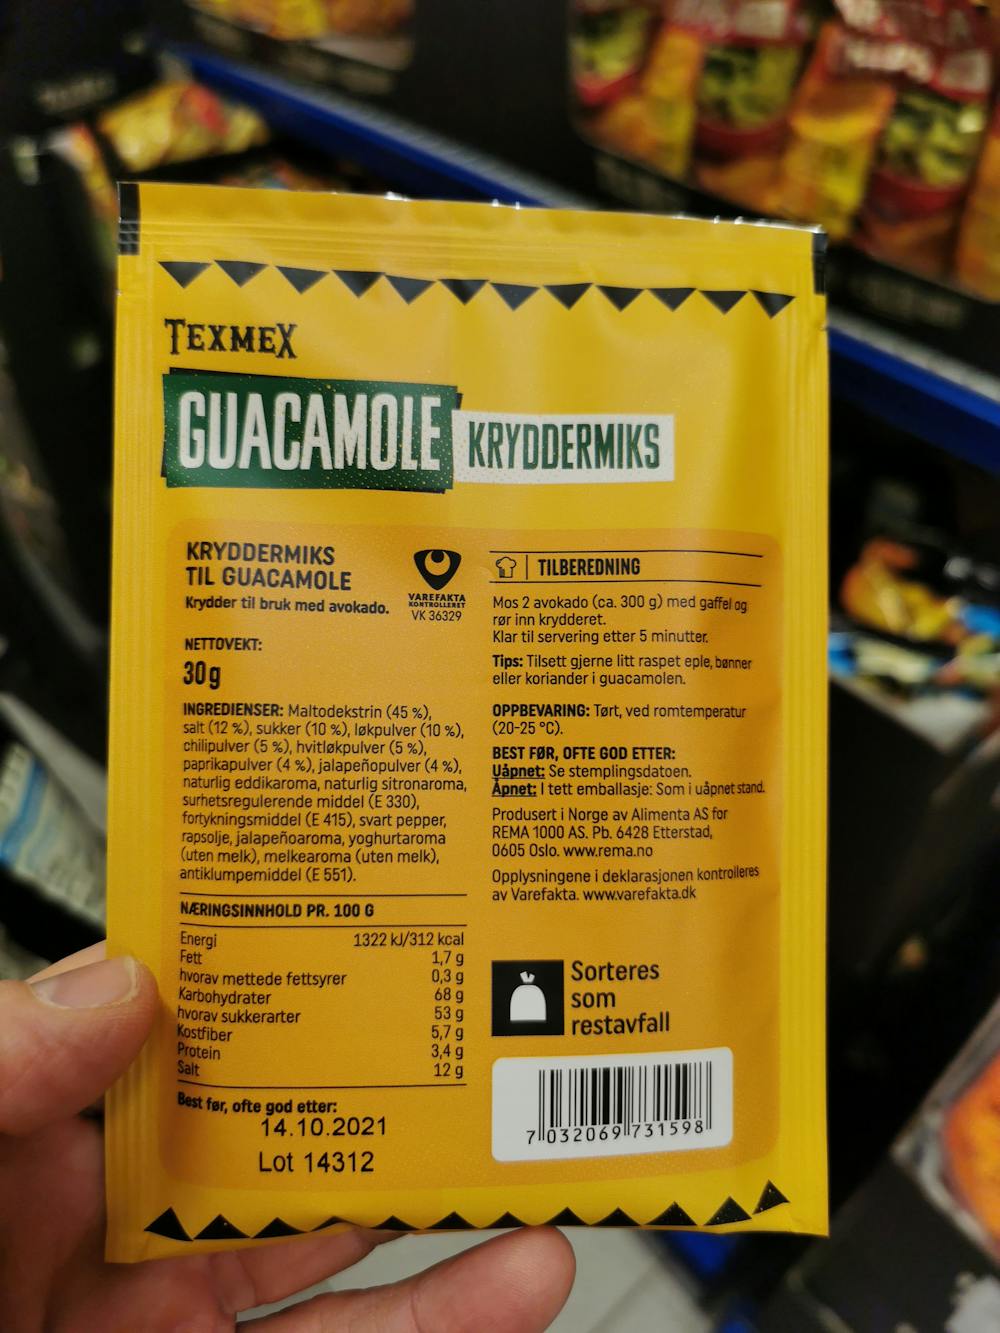 Ingredienslisten til Texmex guacamole kryddermiks, Rema 1000